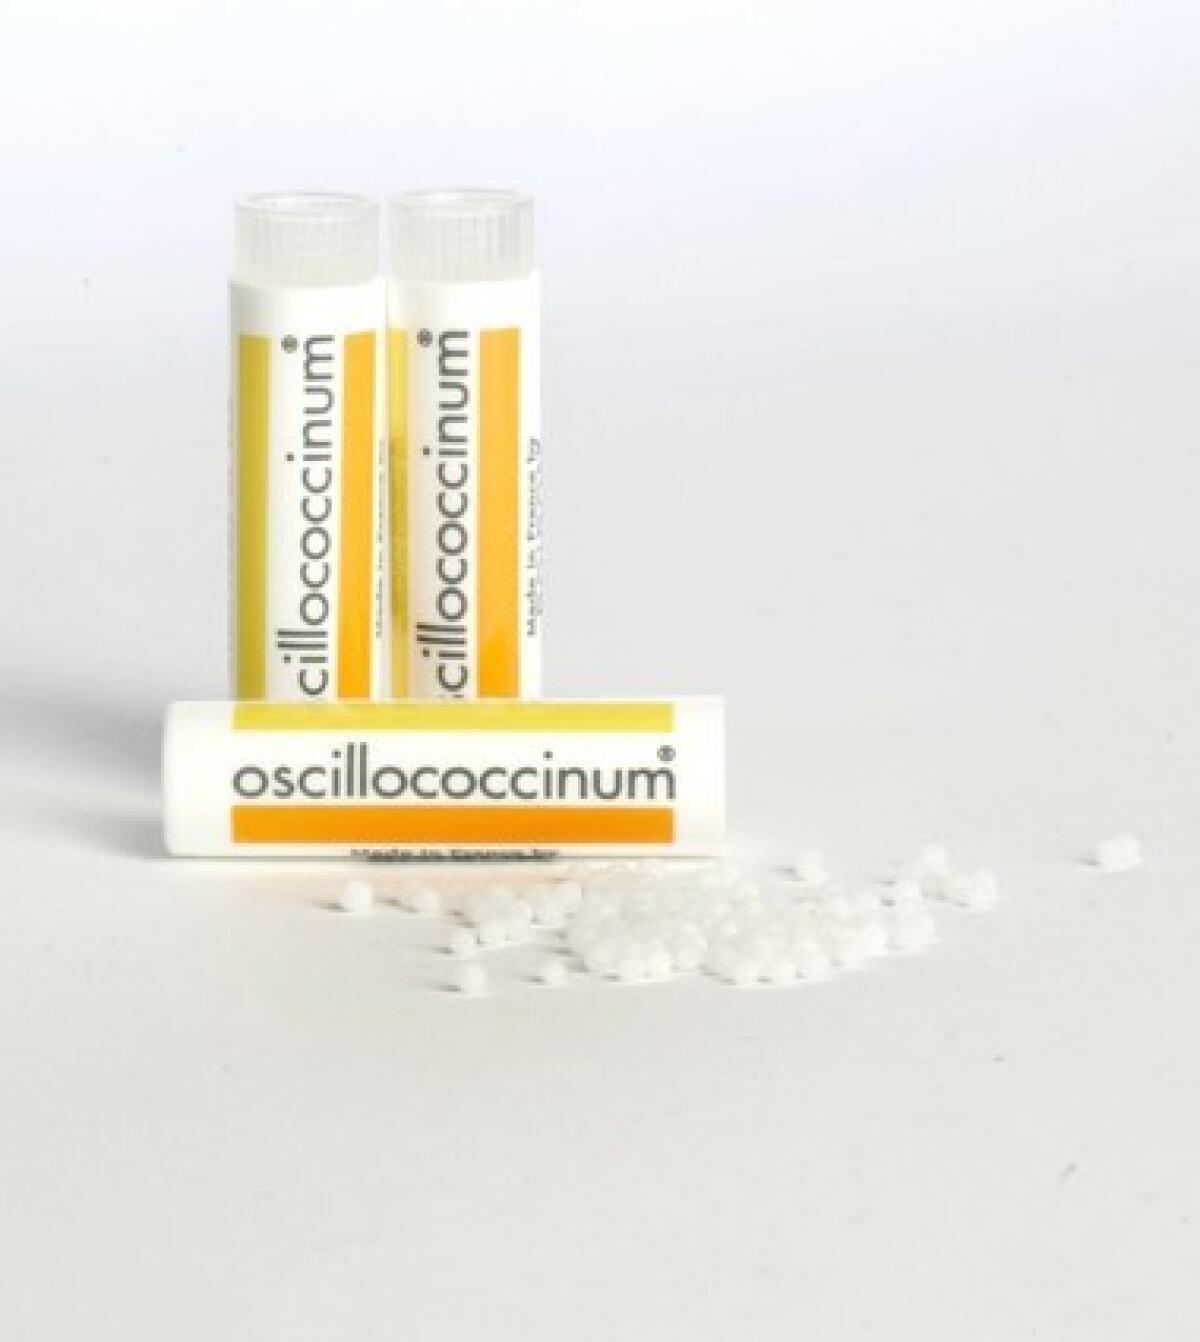 Oscillococcinum may shorten flu, by hours.